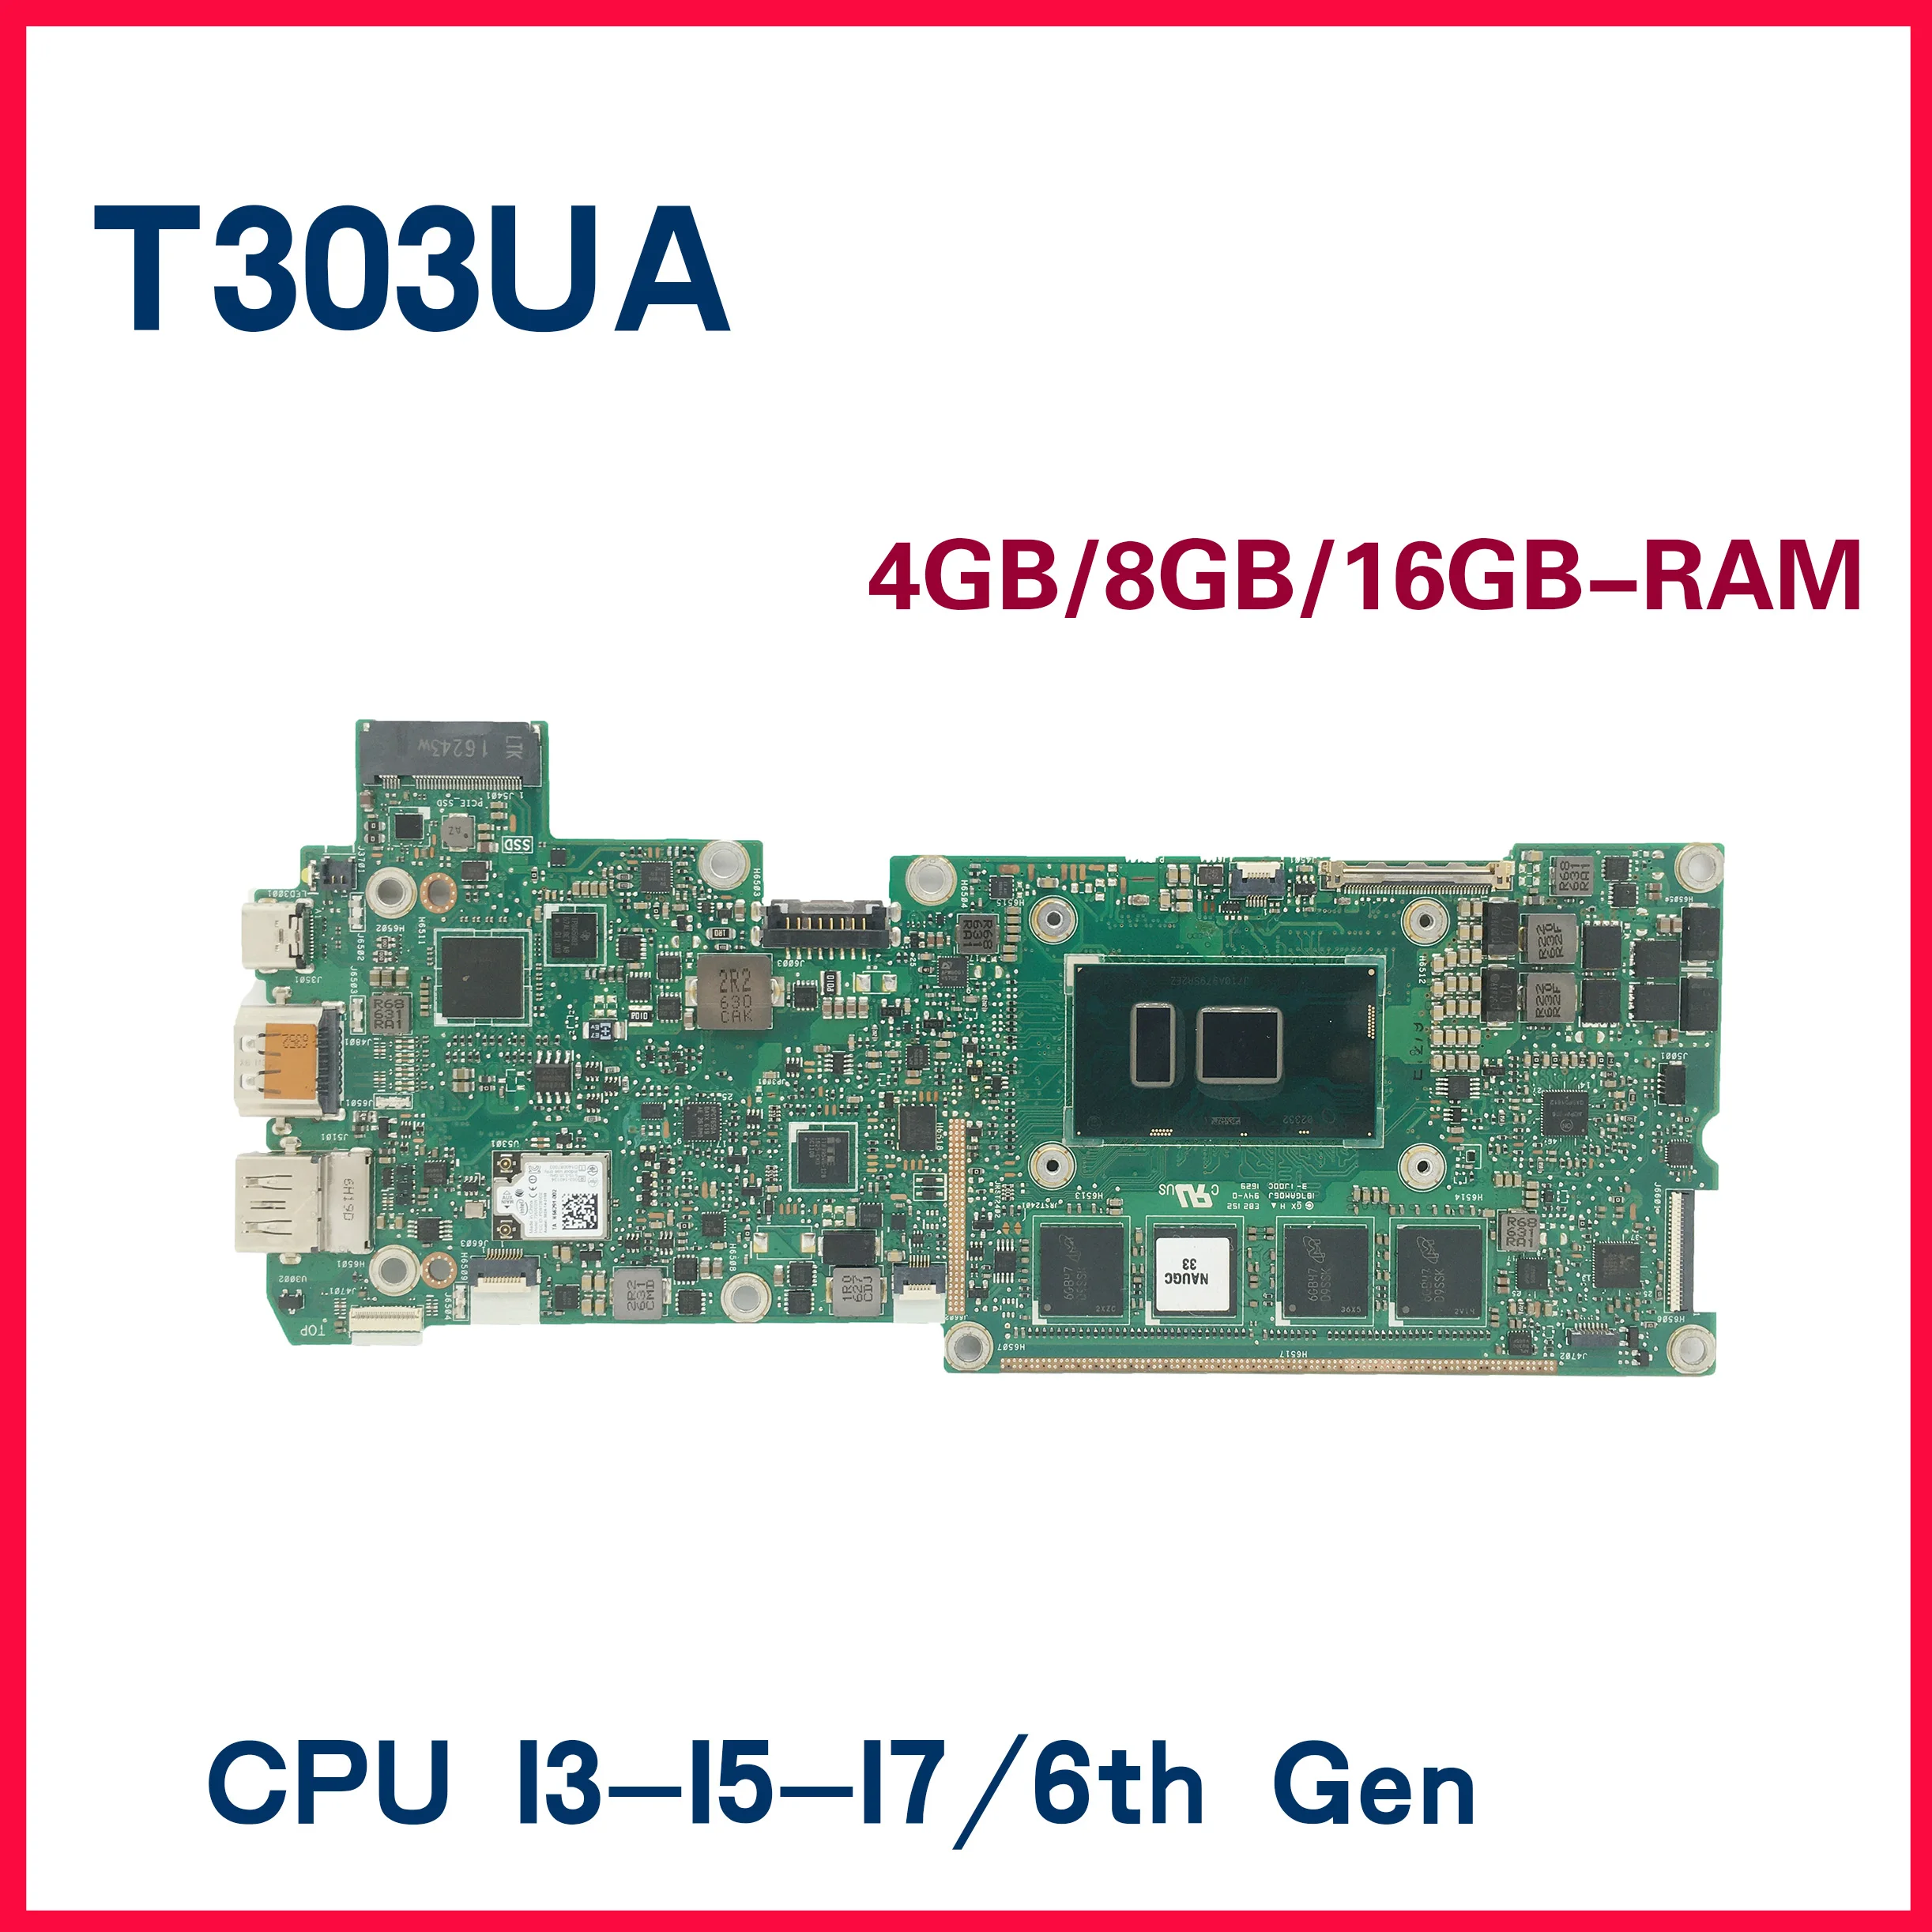 

T303UA Laptop Motherboard For ASUS Transformer 3 Pro T303UA T303U Mainboard 4GB/8GB/16GB-RAM I3-6100U I5-6200U I7-6500U